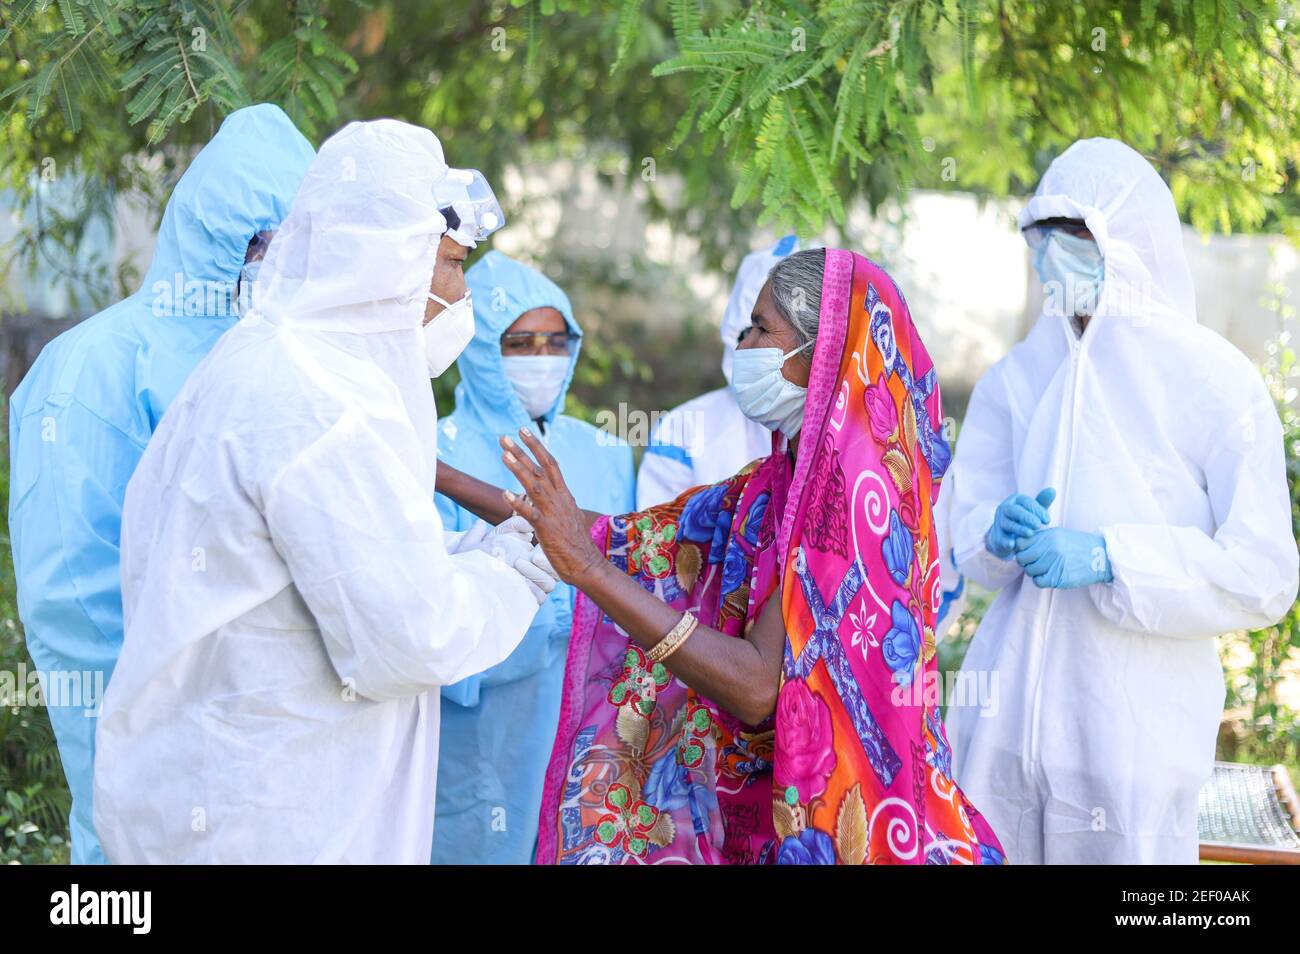 Anciana Mujer India comunicándose con trabajadores médicos usando ropa protectora Foto de stock